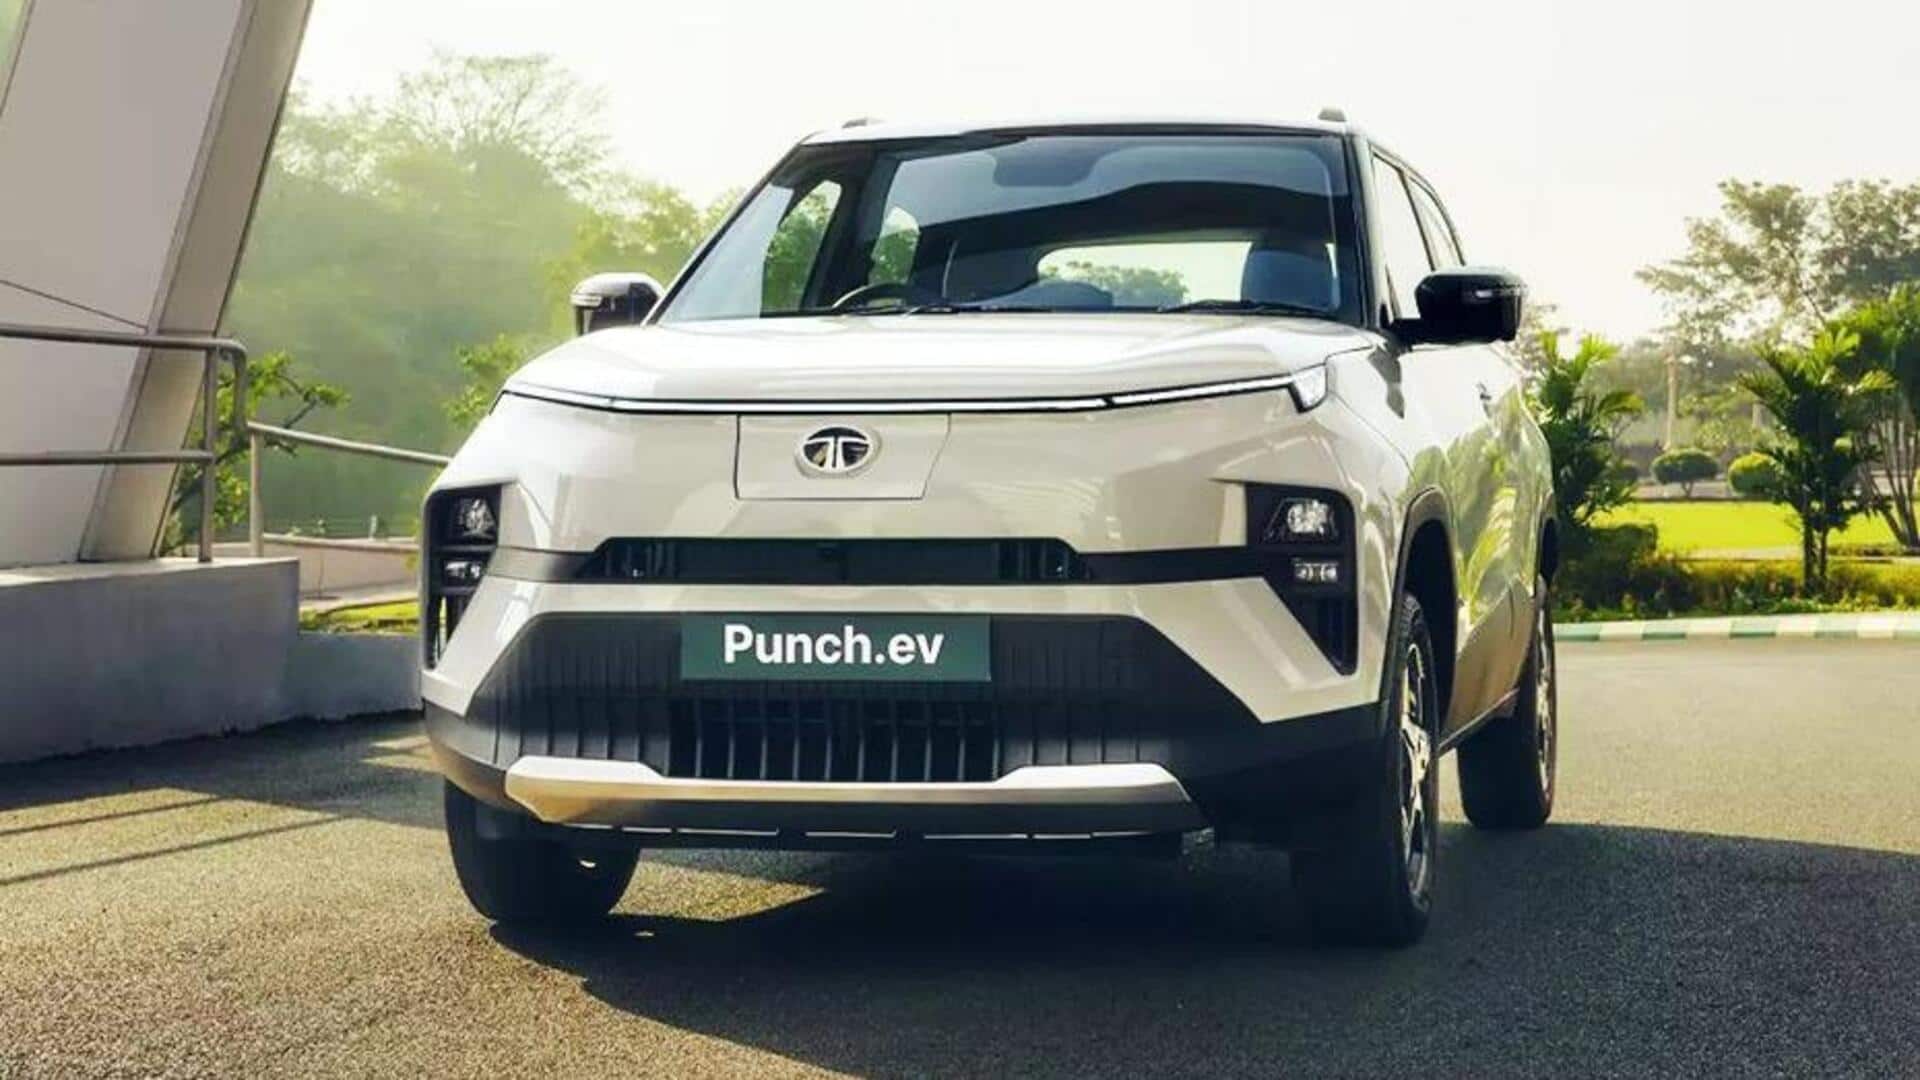 Tata Punch.ev to deliver 400km of range in India